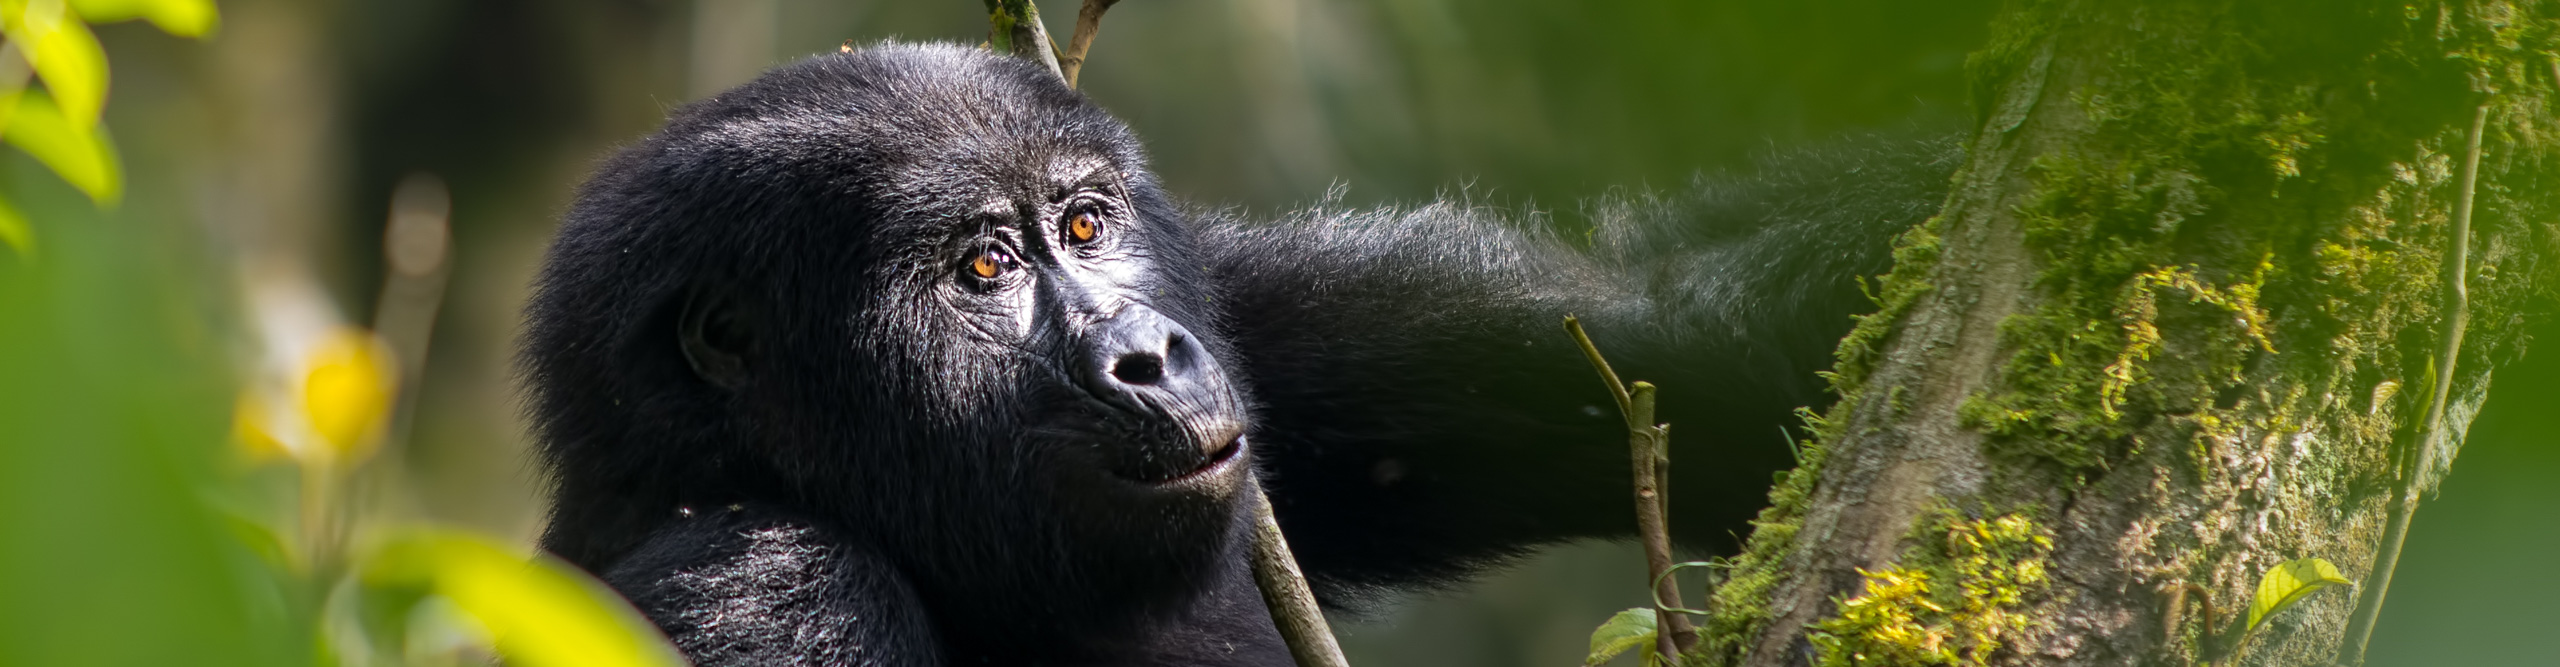 Mountain gorilla in a tree with sun on their face in the Bwindi forest, Nshongi, Uganda 